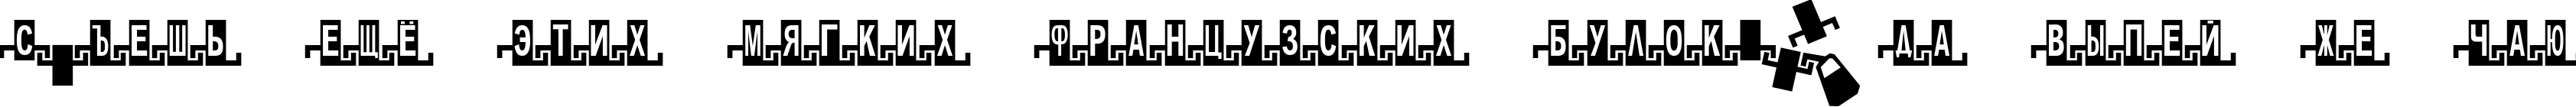 Пример написания шрифтом Zipper1 Cyr текста на русском